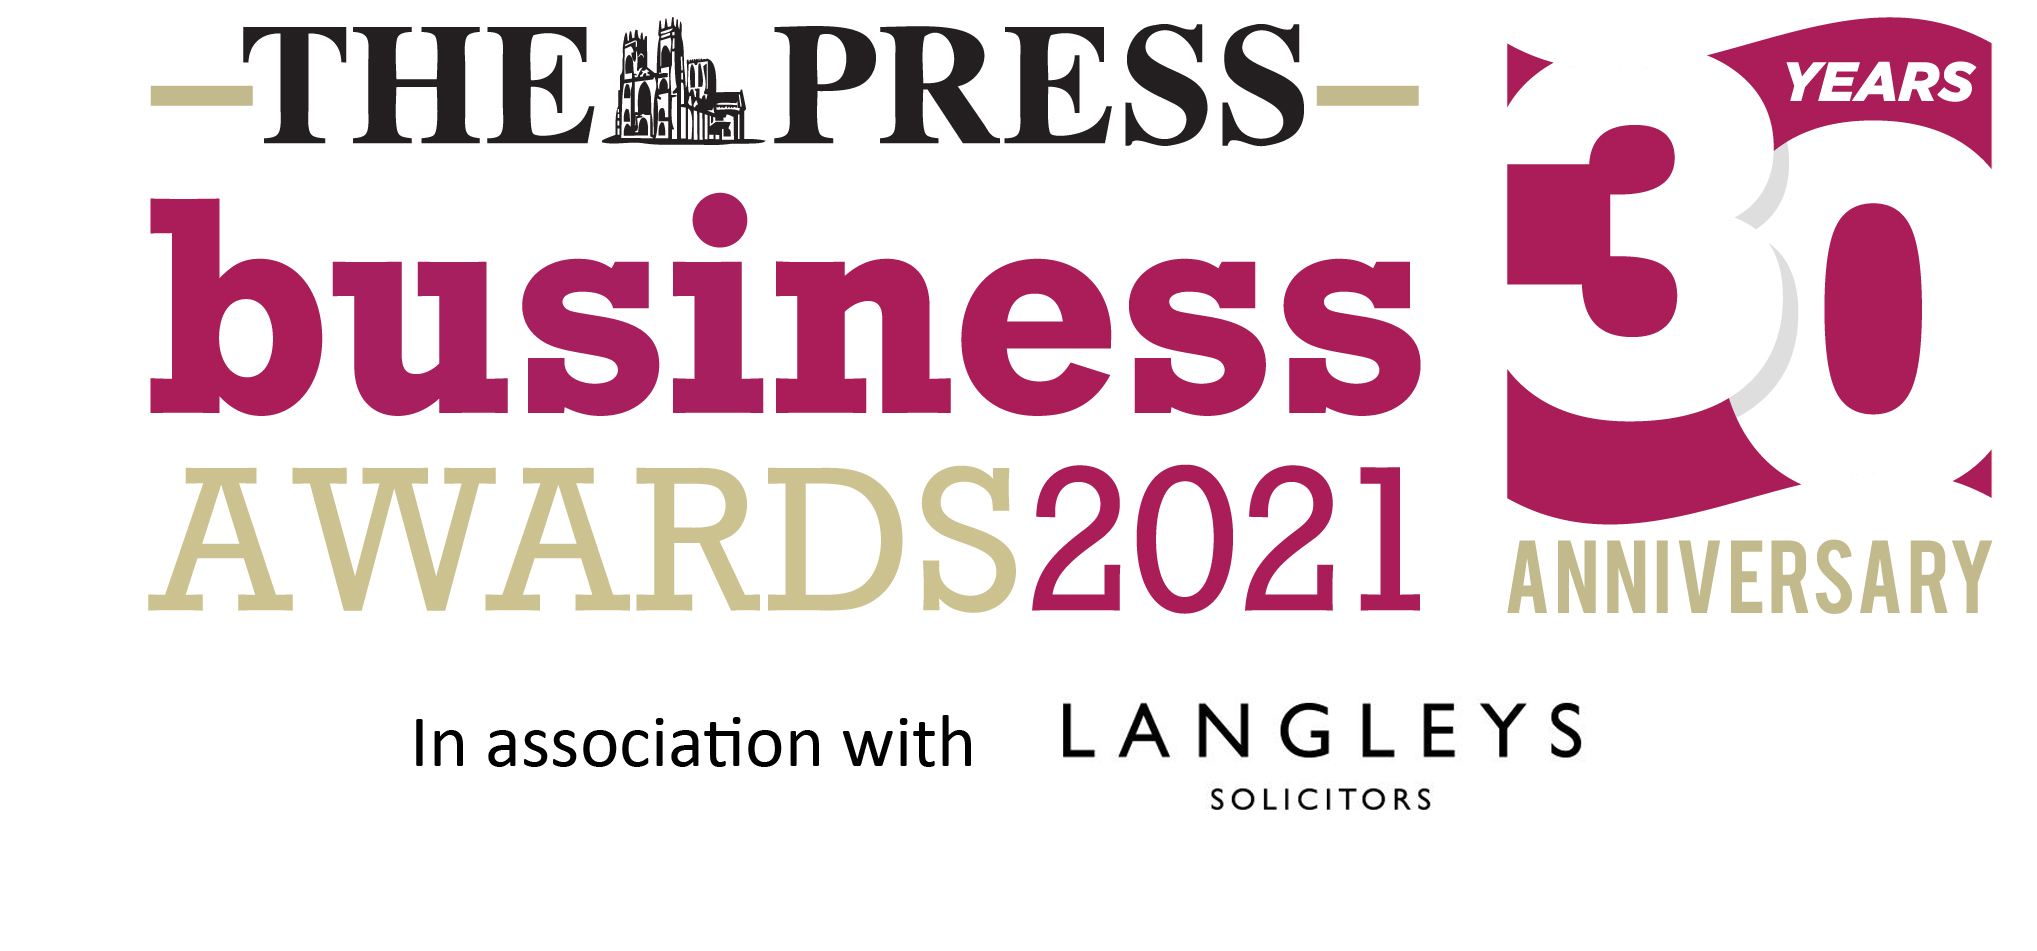 York Press: York Business Awards 30th Anniversary, in partnership with Langleys